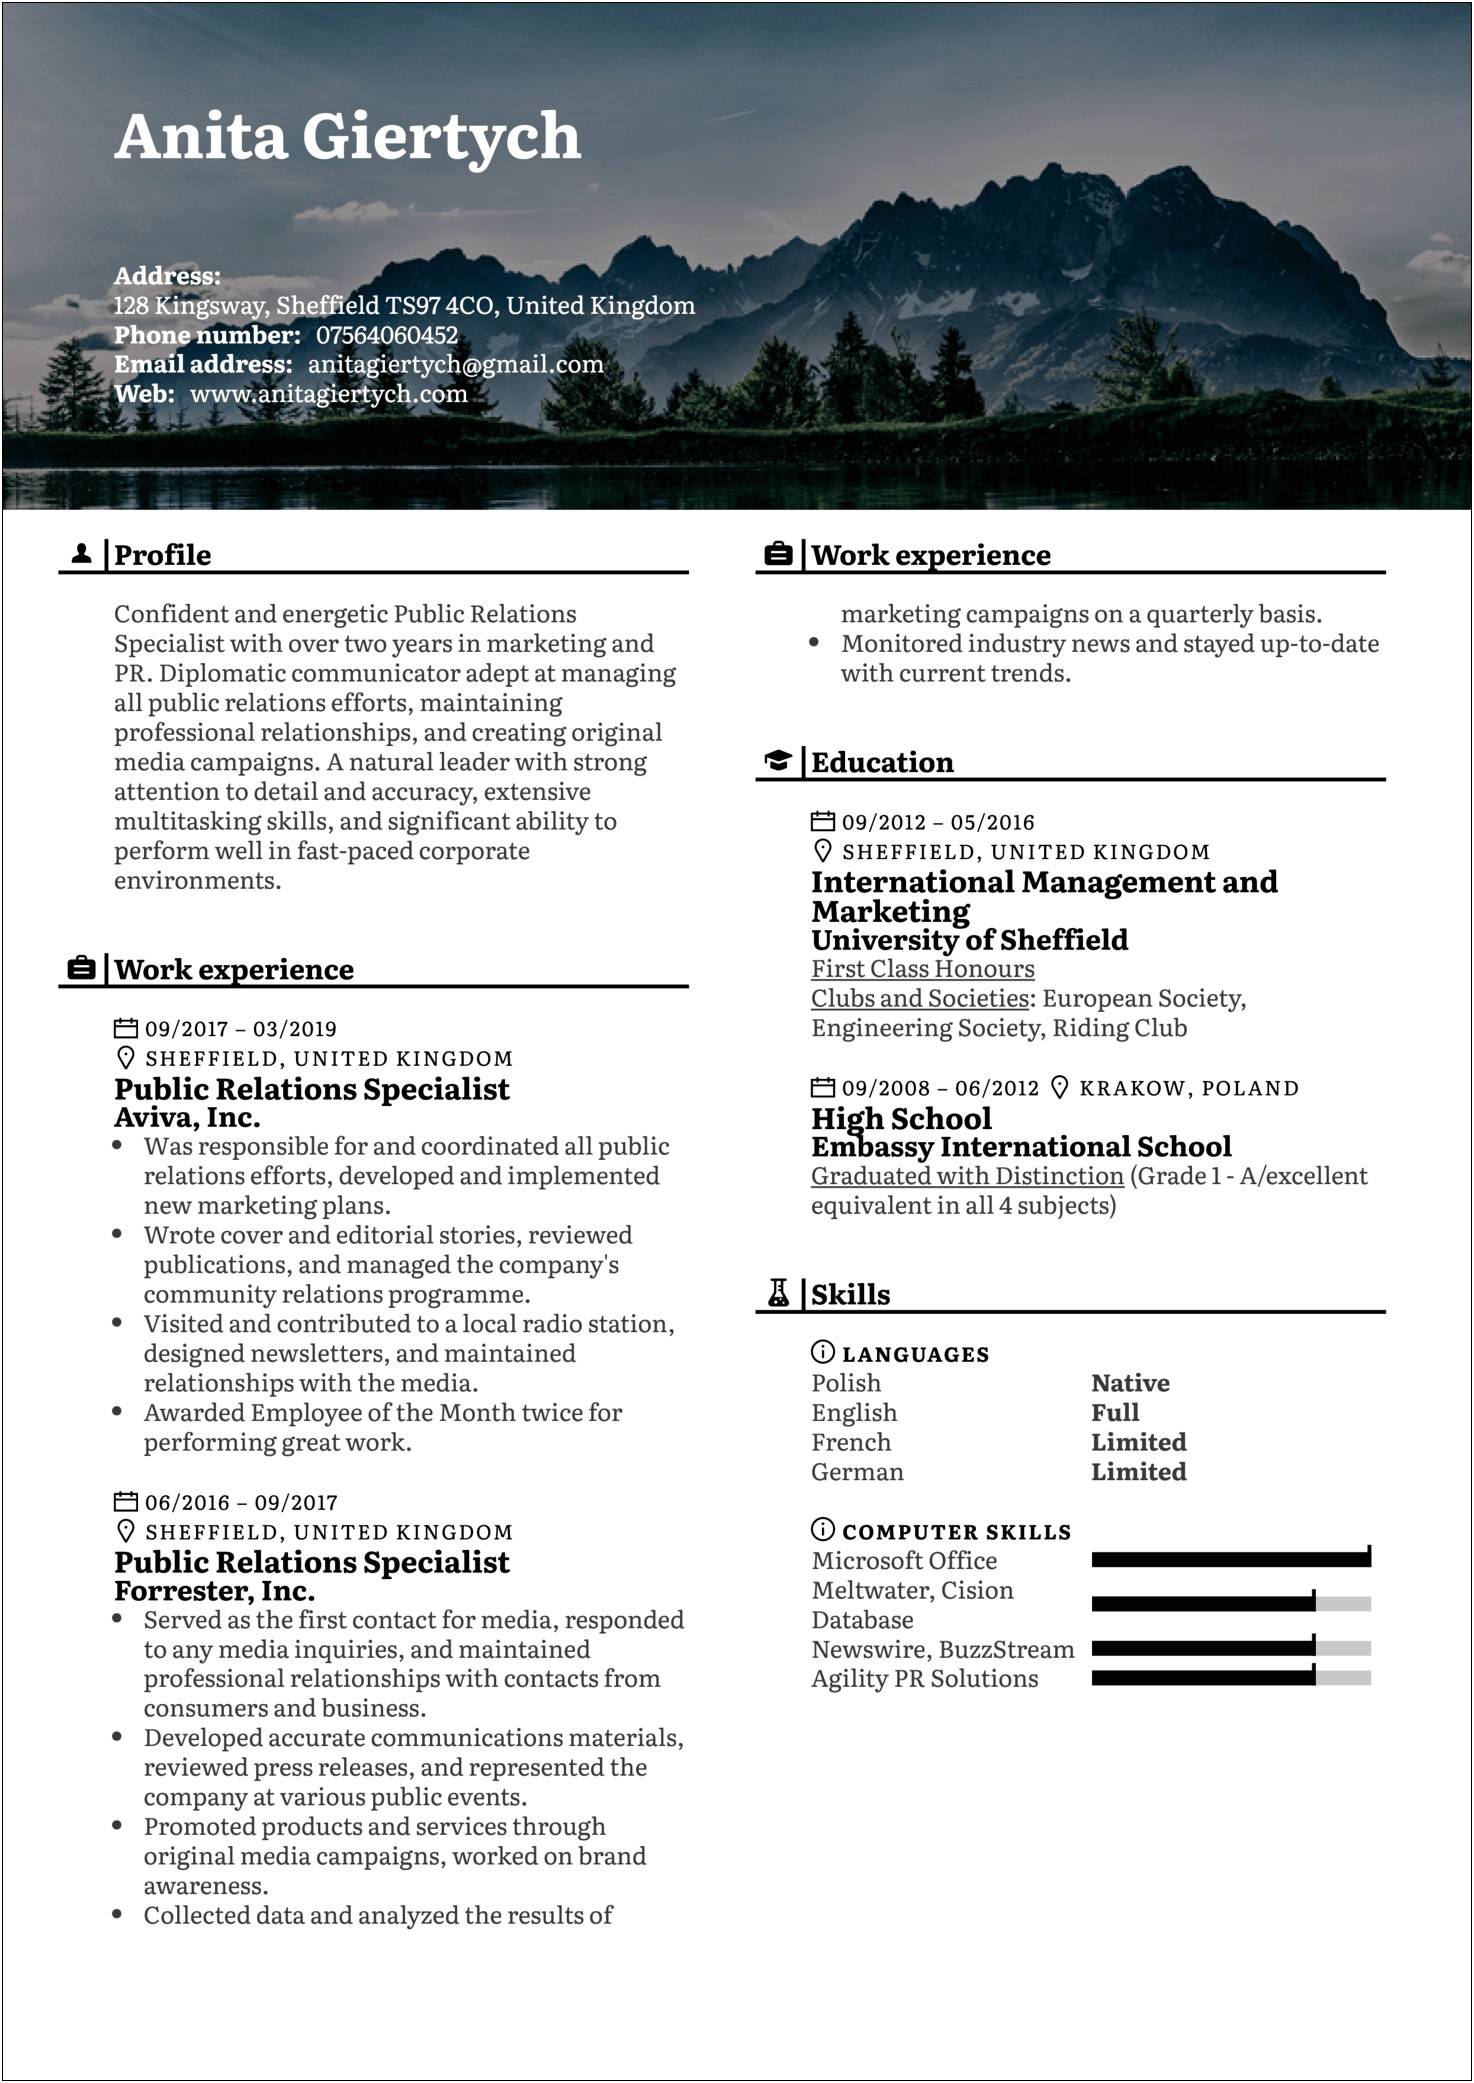 Public Affairs In Business Description Resume